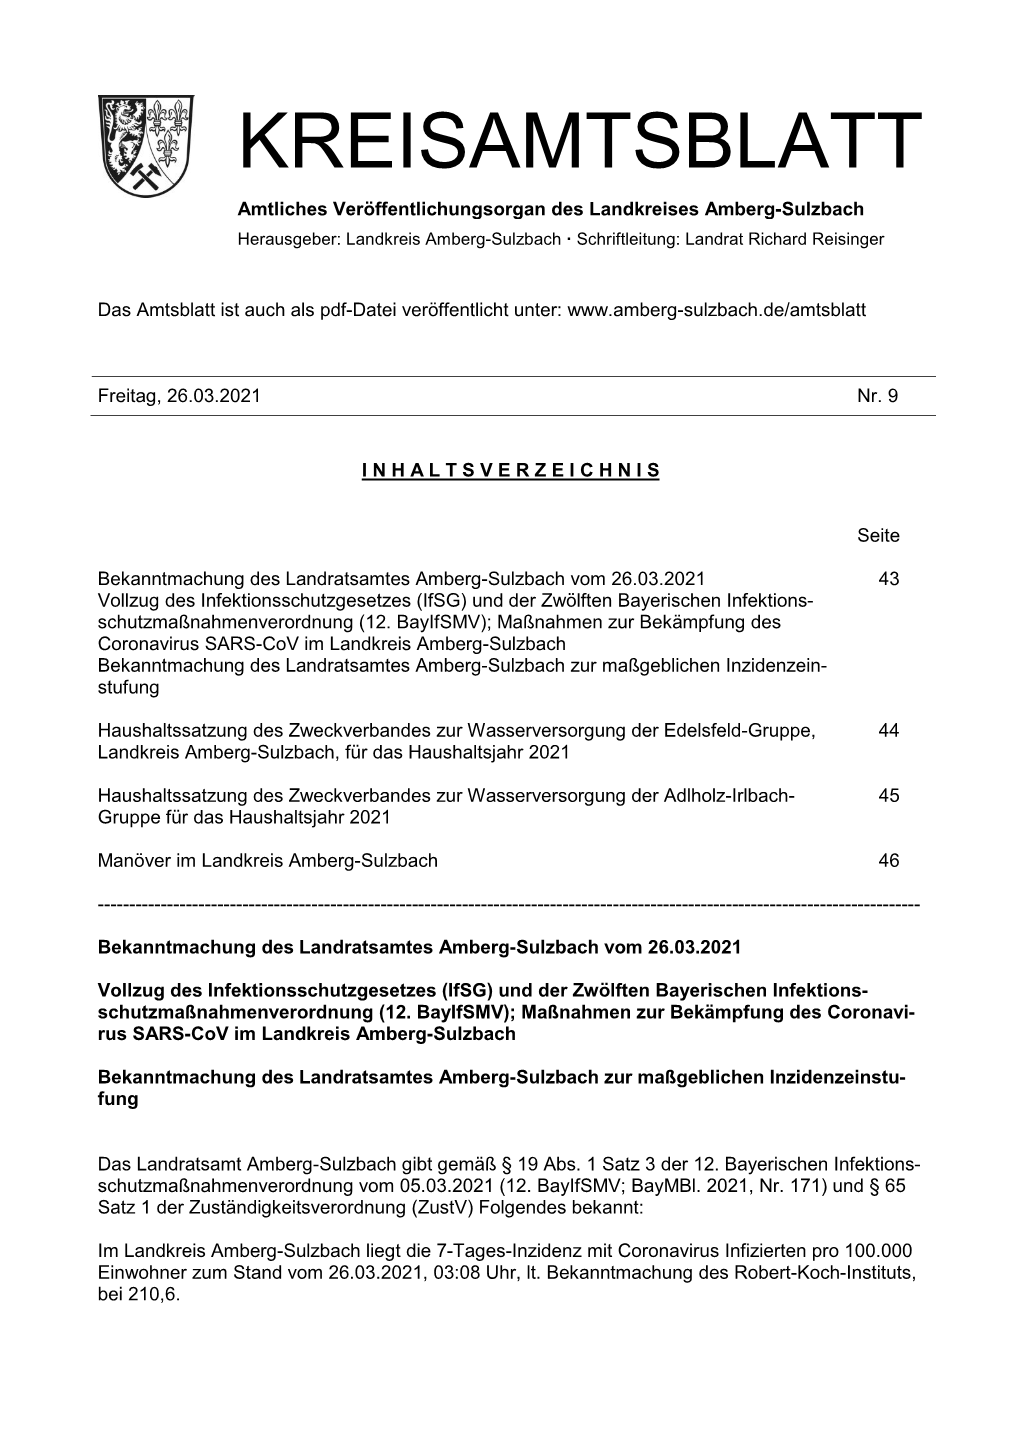 Kreisamtsblatt 09/2021 PDF, 91 Kb 26.03.2021 Seite 43 Bis 47